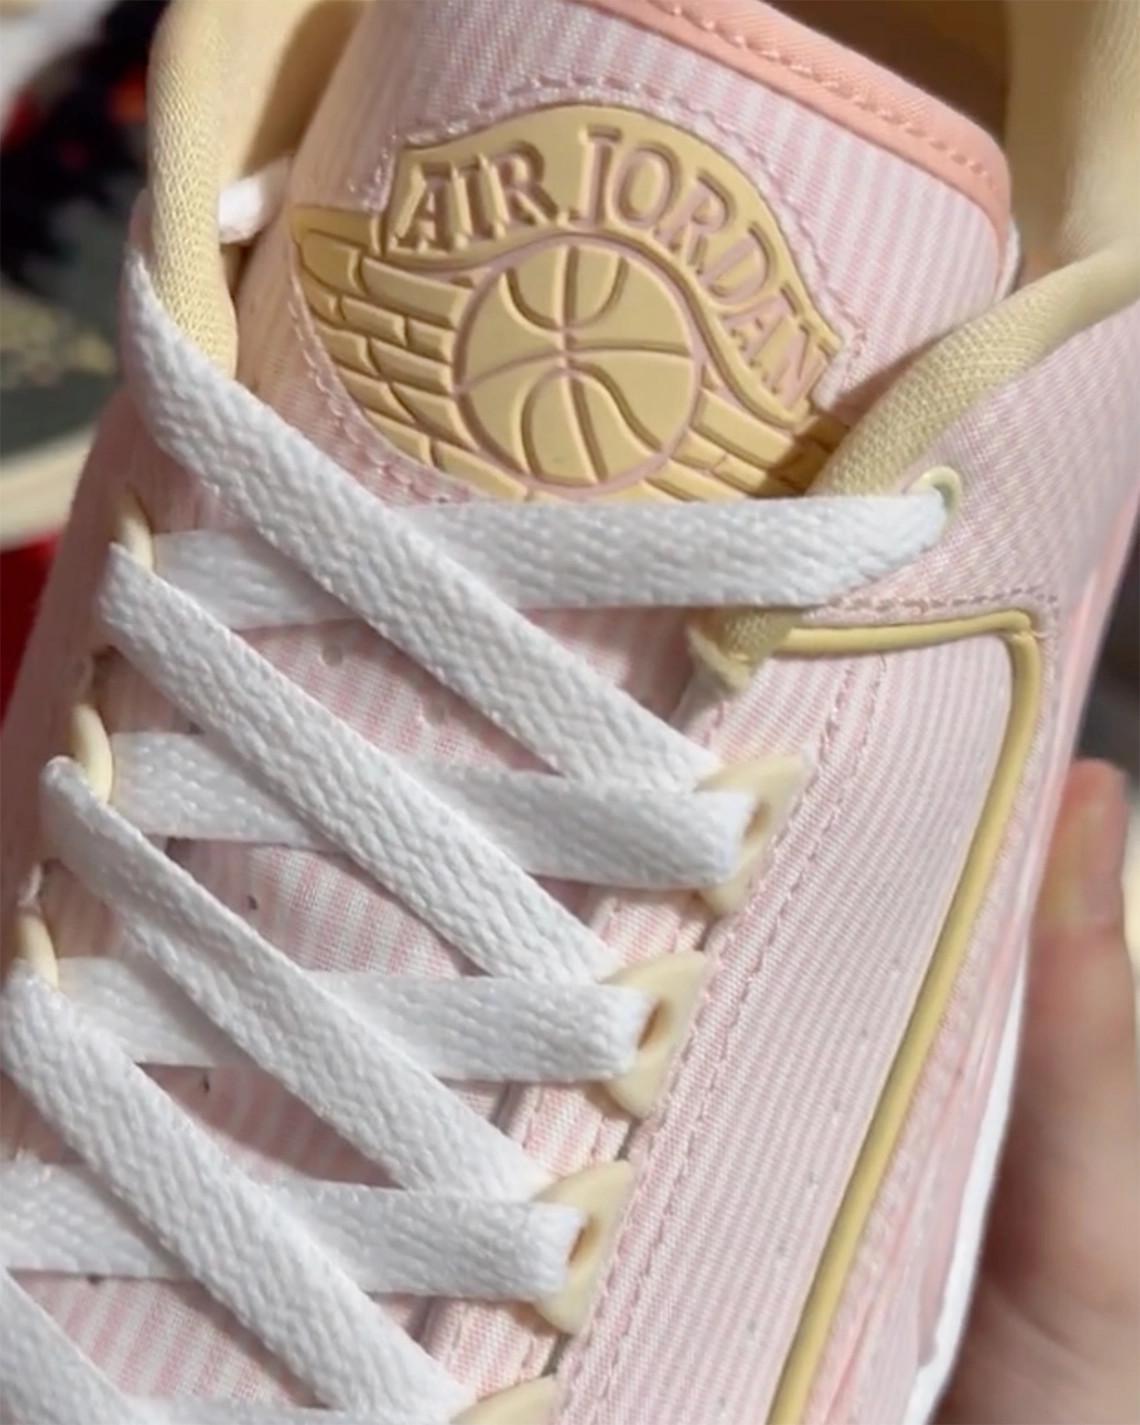 L'Air Jordan 2 Low Craft "Atmosphere" présente des motifs seersucker